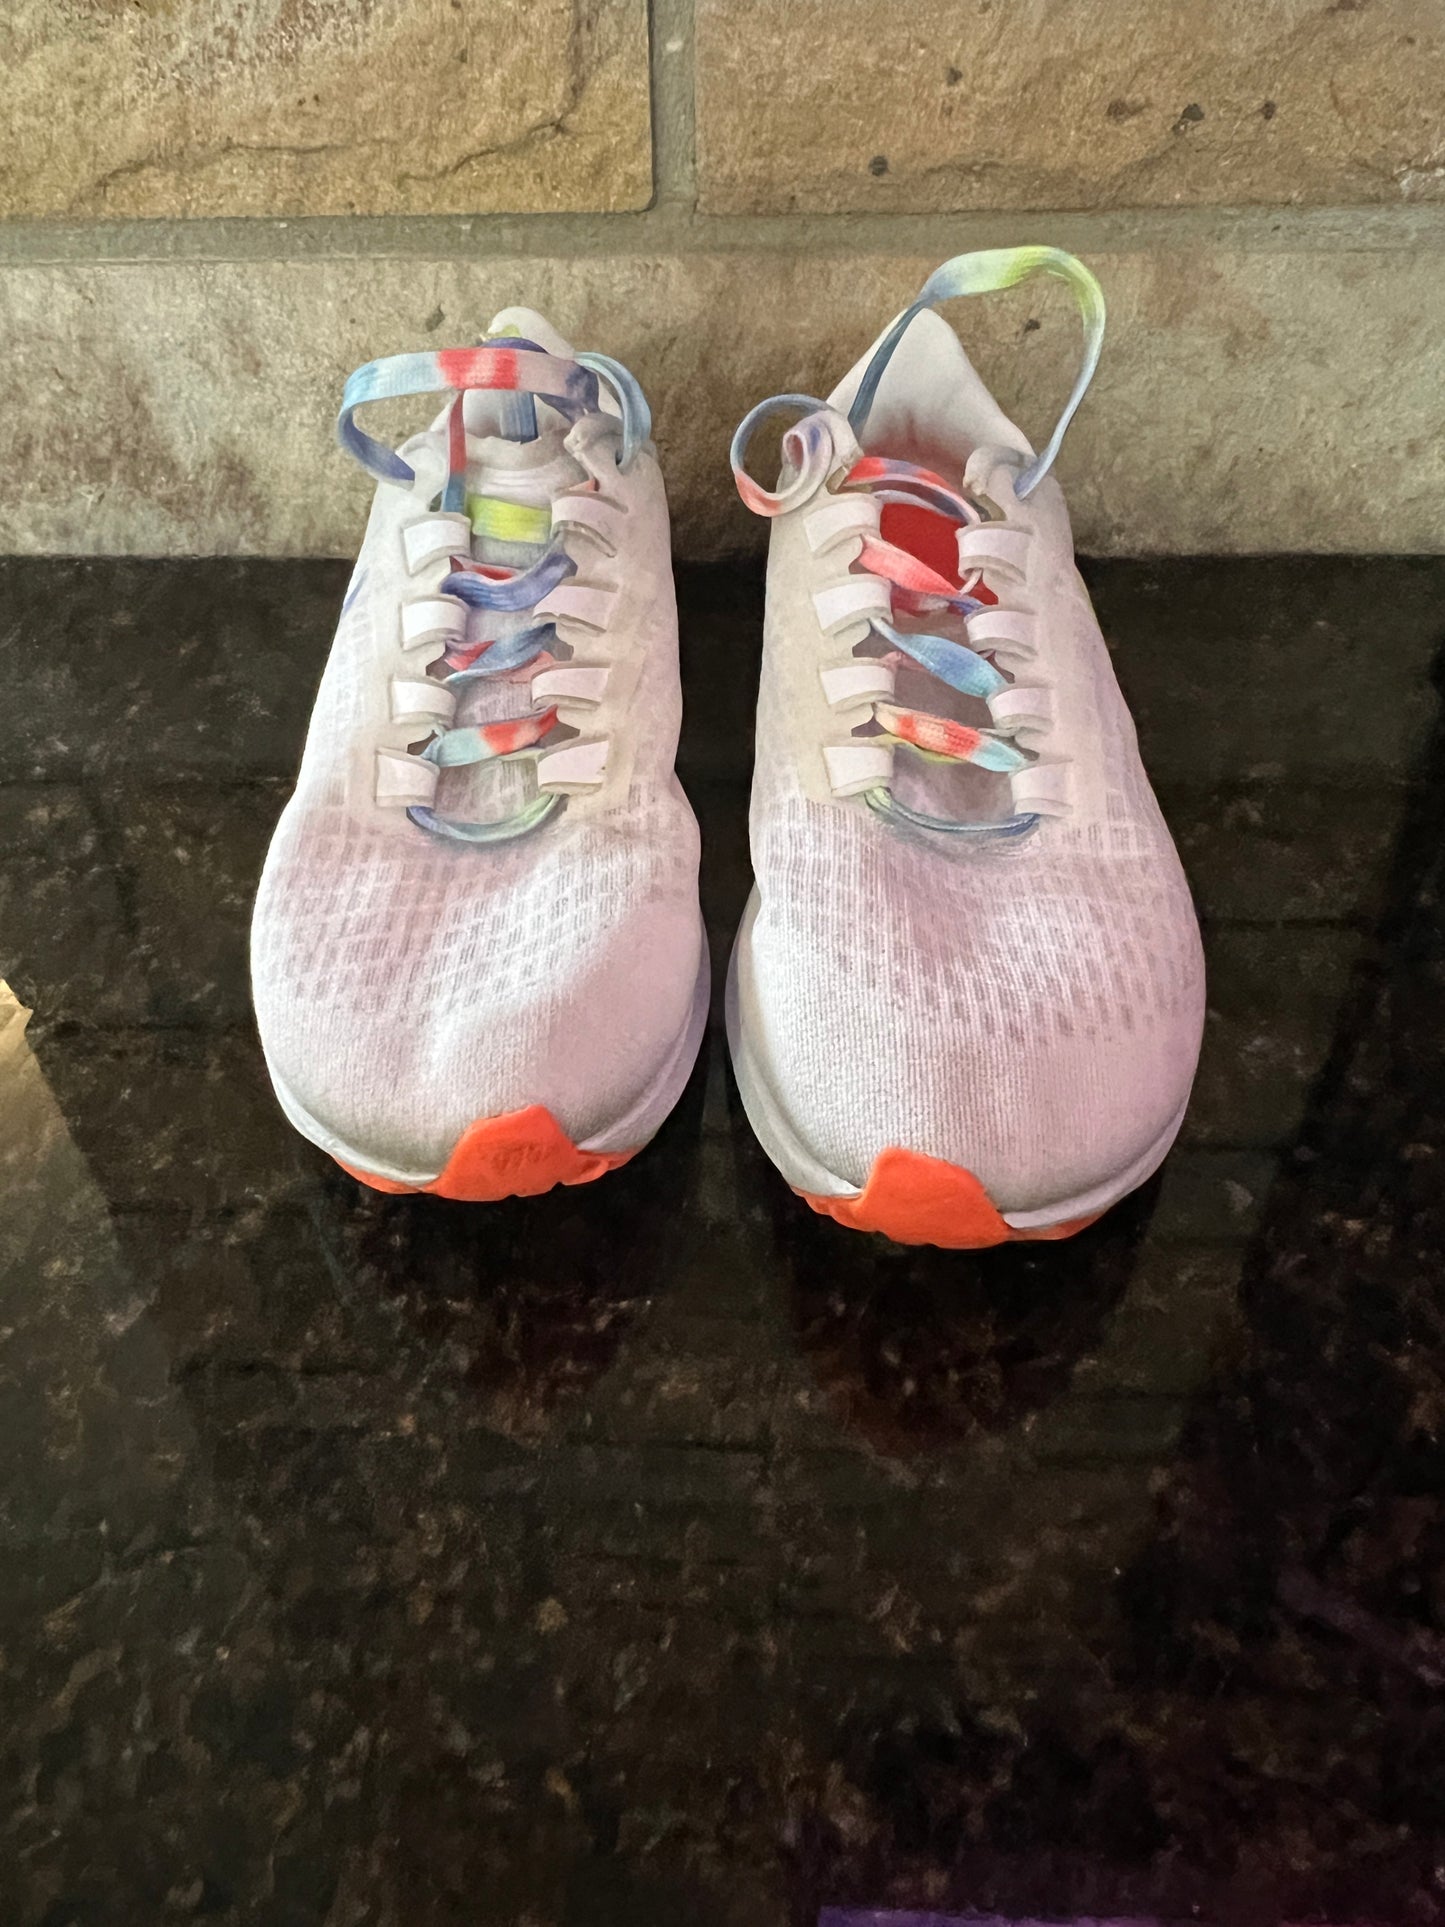 Women’s size 7.5 Nike White and Rainbow Shoe- PPU 45044 (Liberty Twp)